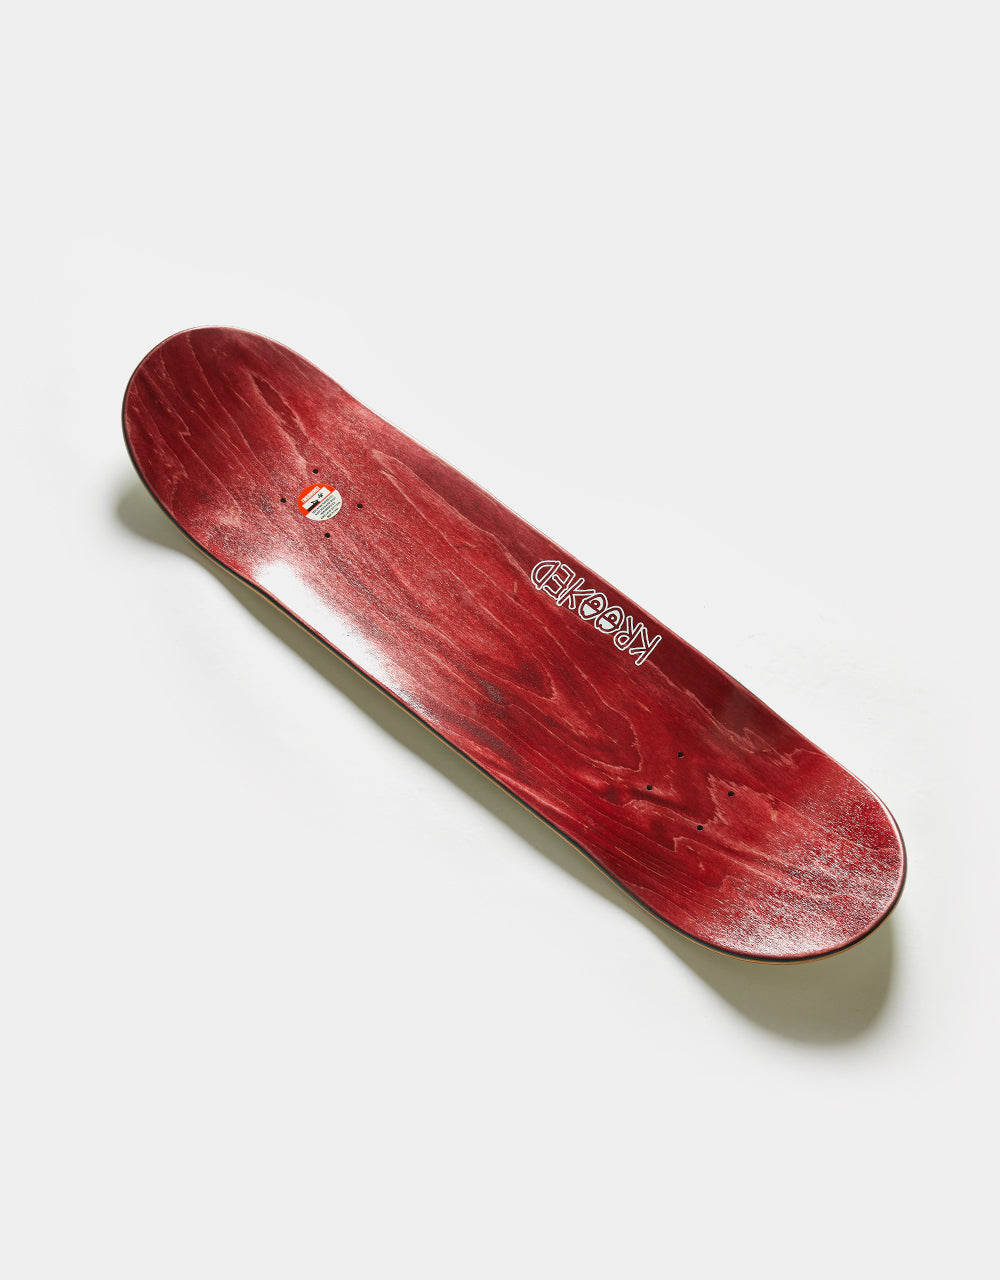 Krooked Una Golden Skateboard Deck - 8.28"